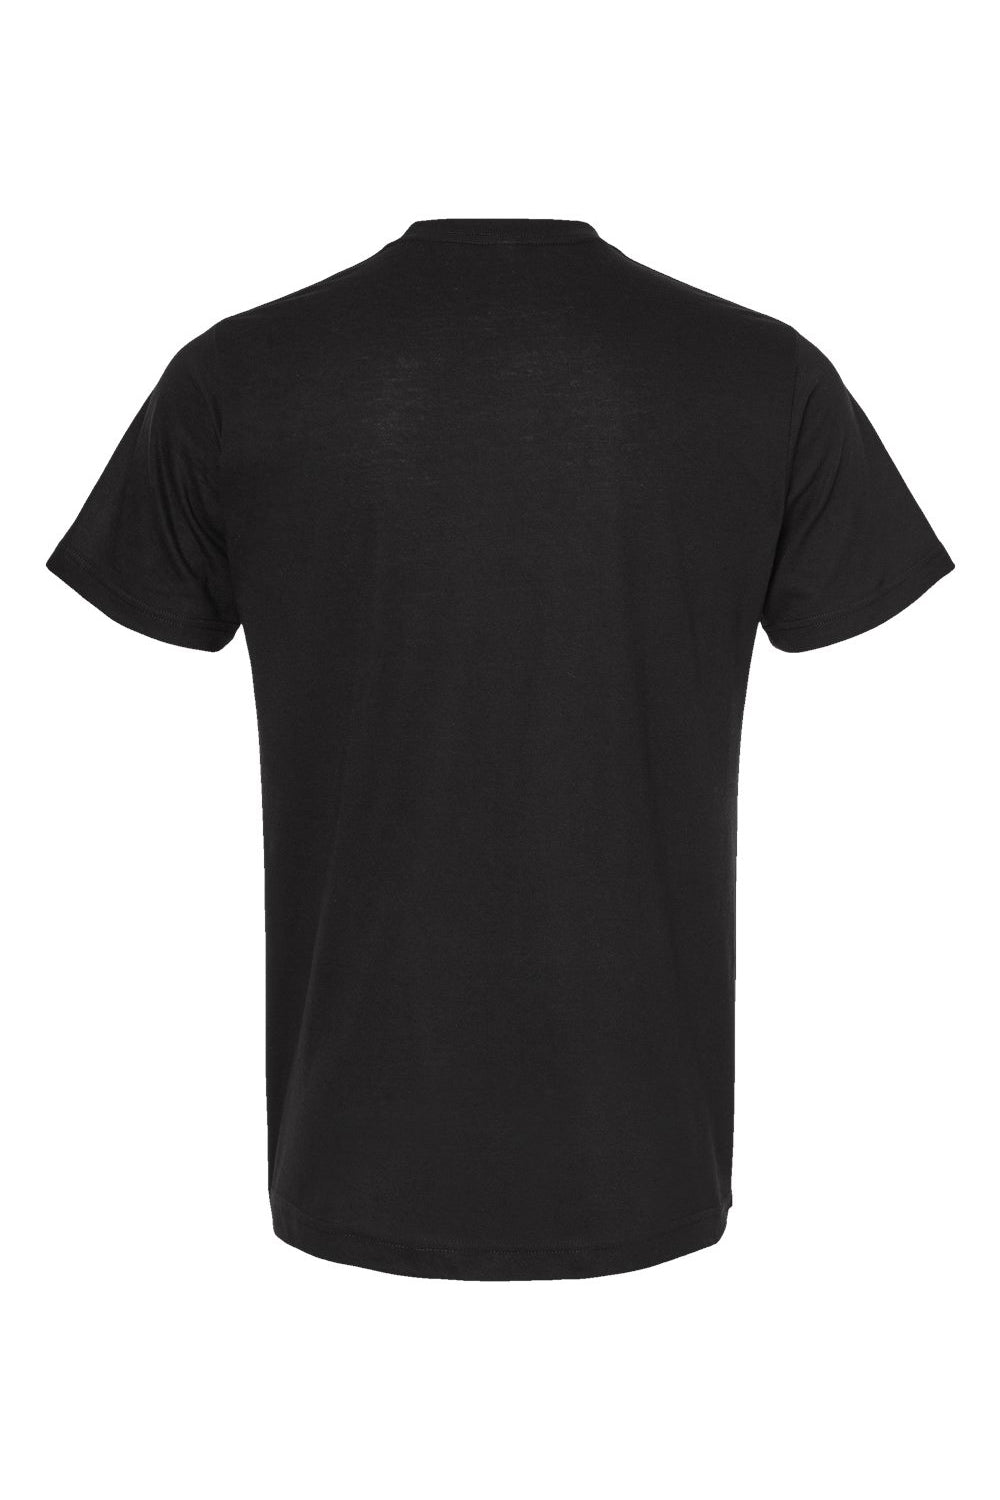 Tultex 241 Mens Poly-Rich Short Sleeve Crewneck T-Shirt Black Flat Back